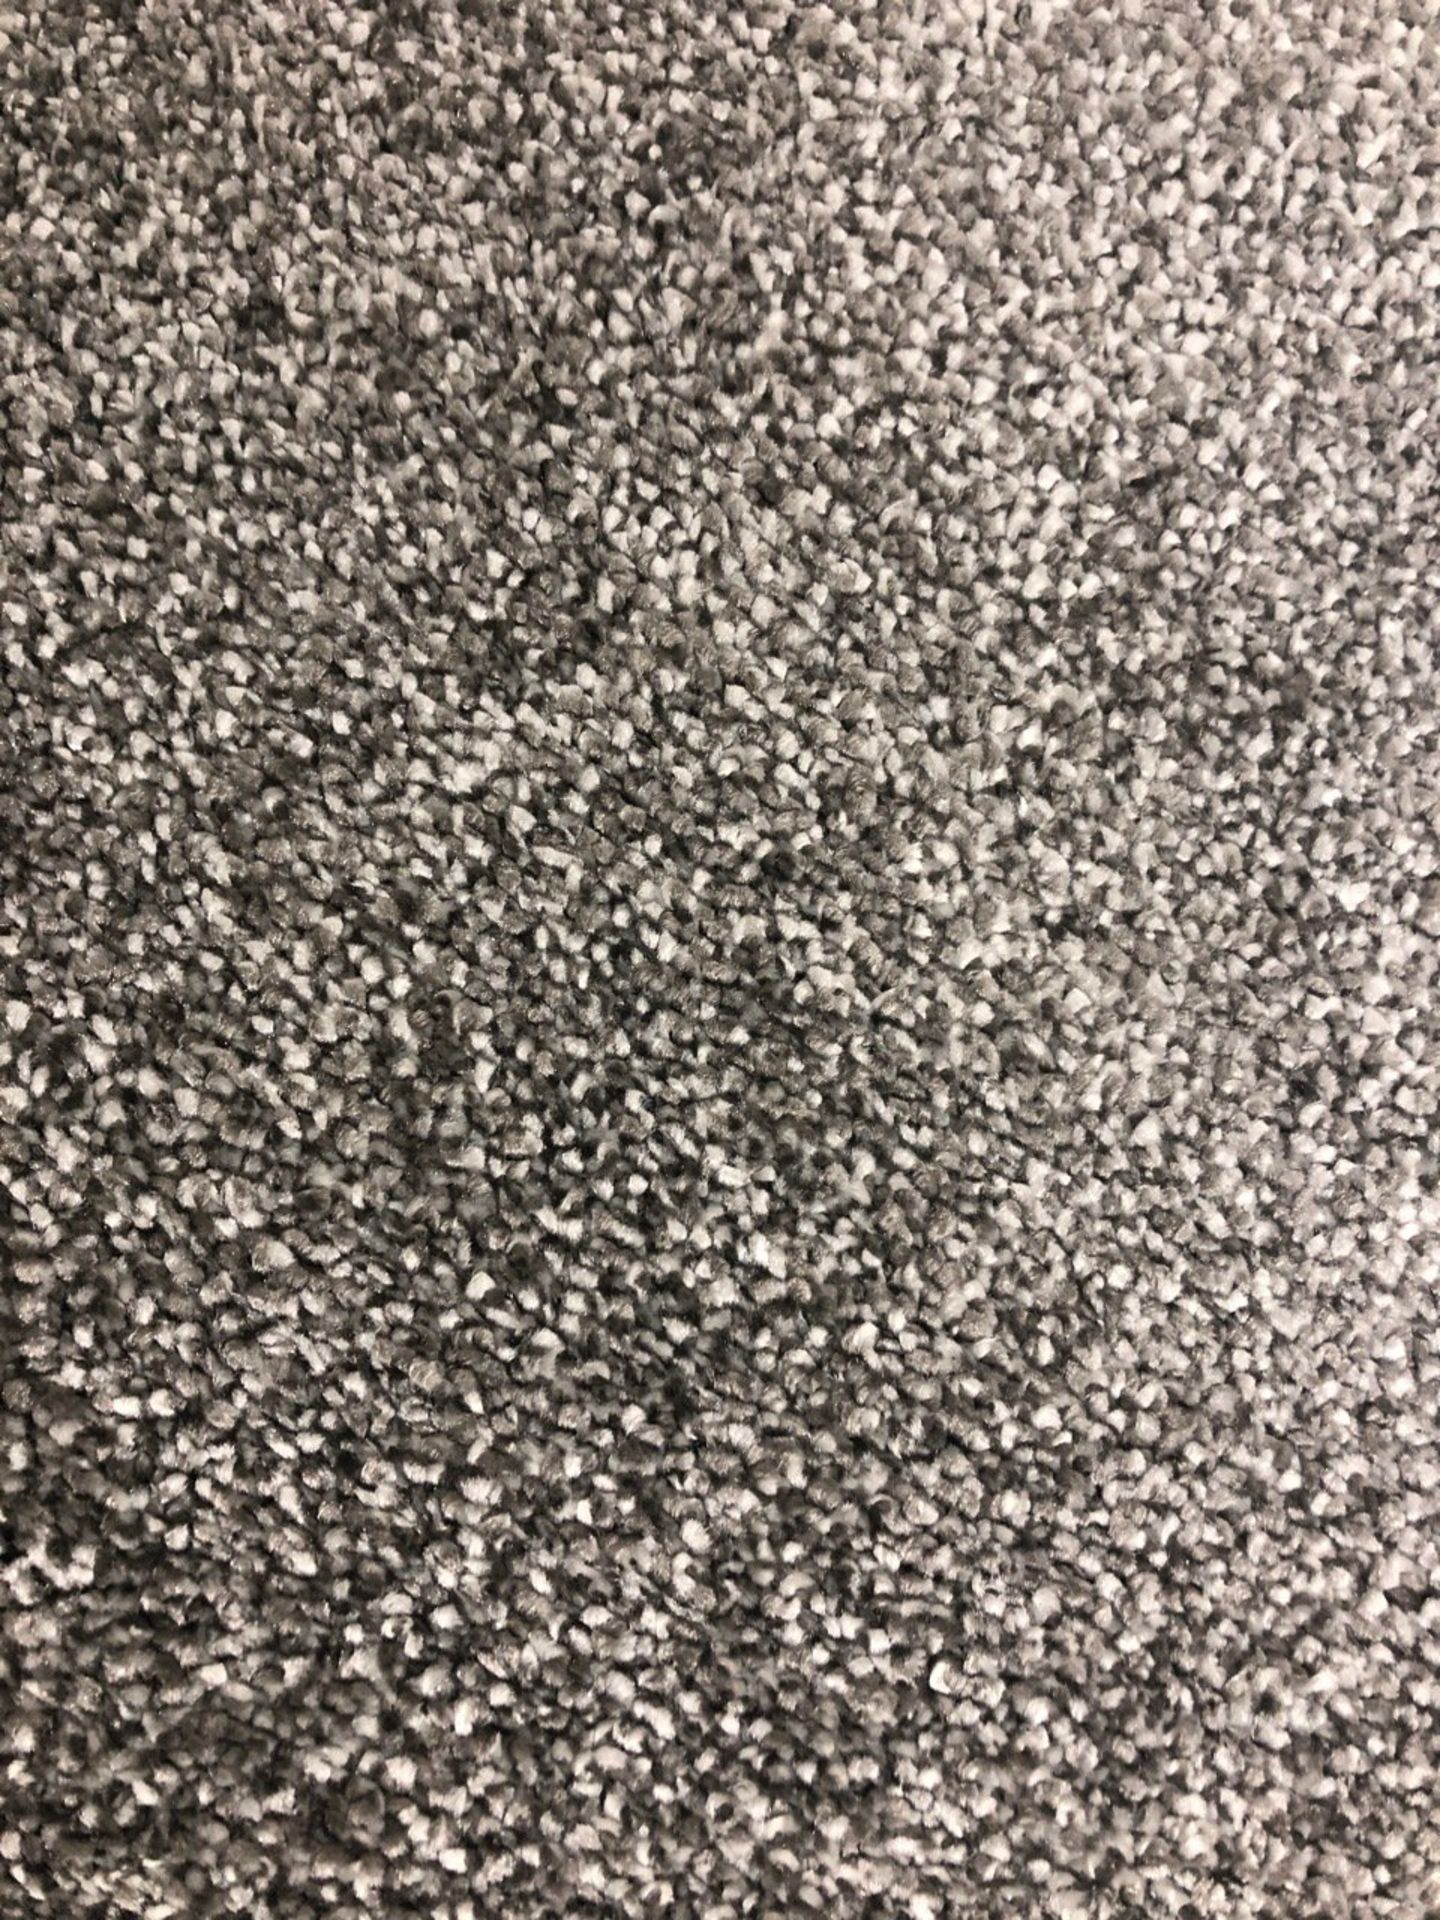 Balta Snowdonia AB3100/0950 Carpet, Colour Code 950 Approx. Size 14.70M x5M - Image 2 of 2